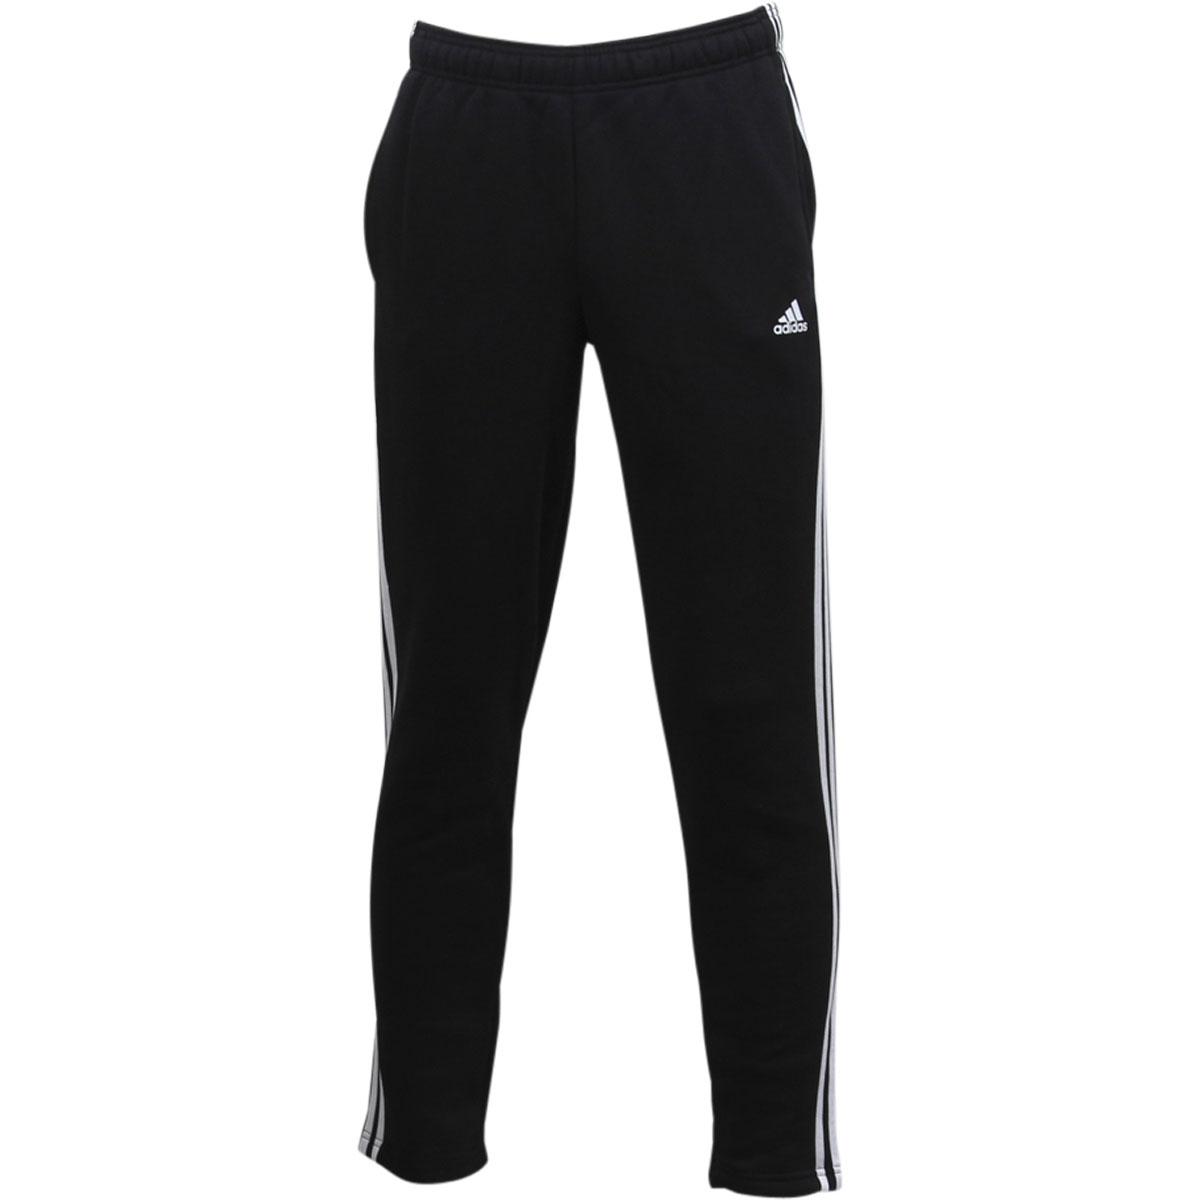 Adidas Men's Essentials 3 Stripes Tapered Fleece Training Pants - Black - X Large -  Essentials 3-Stripes Fleece Pants